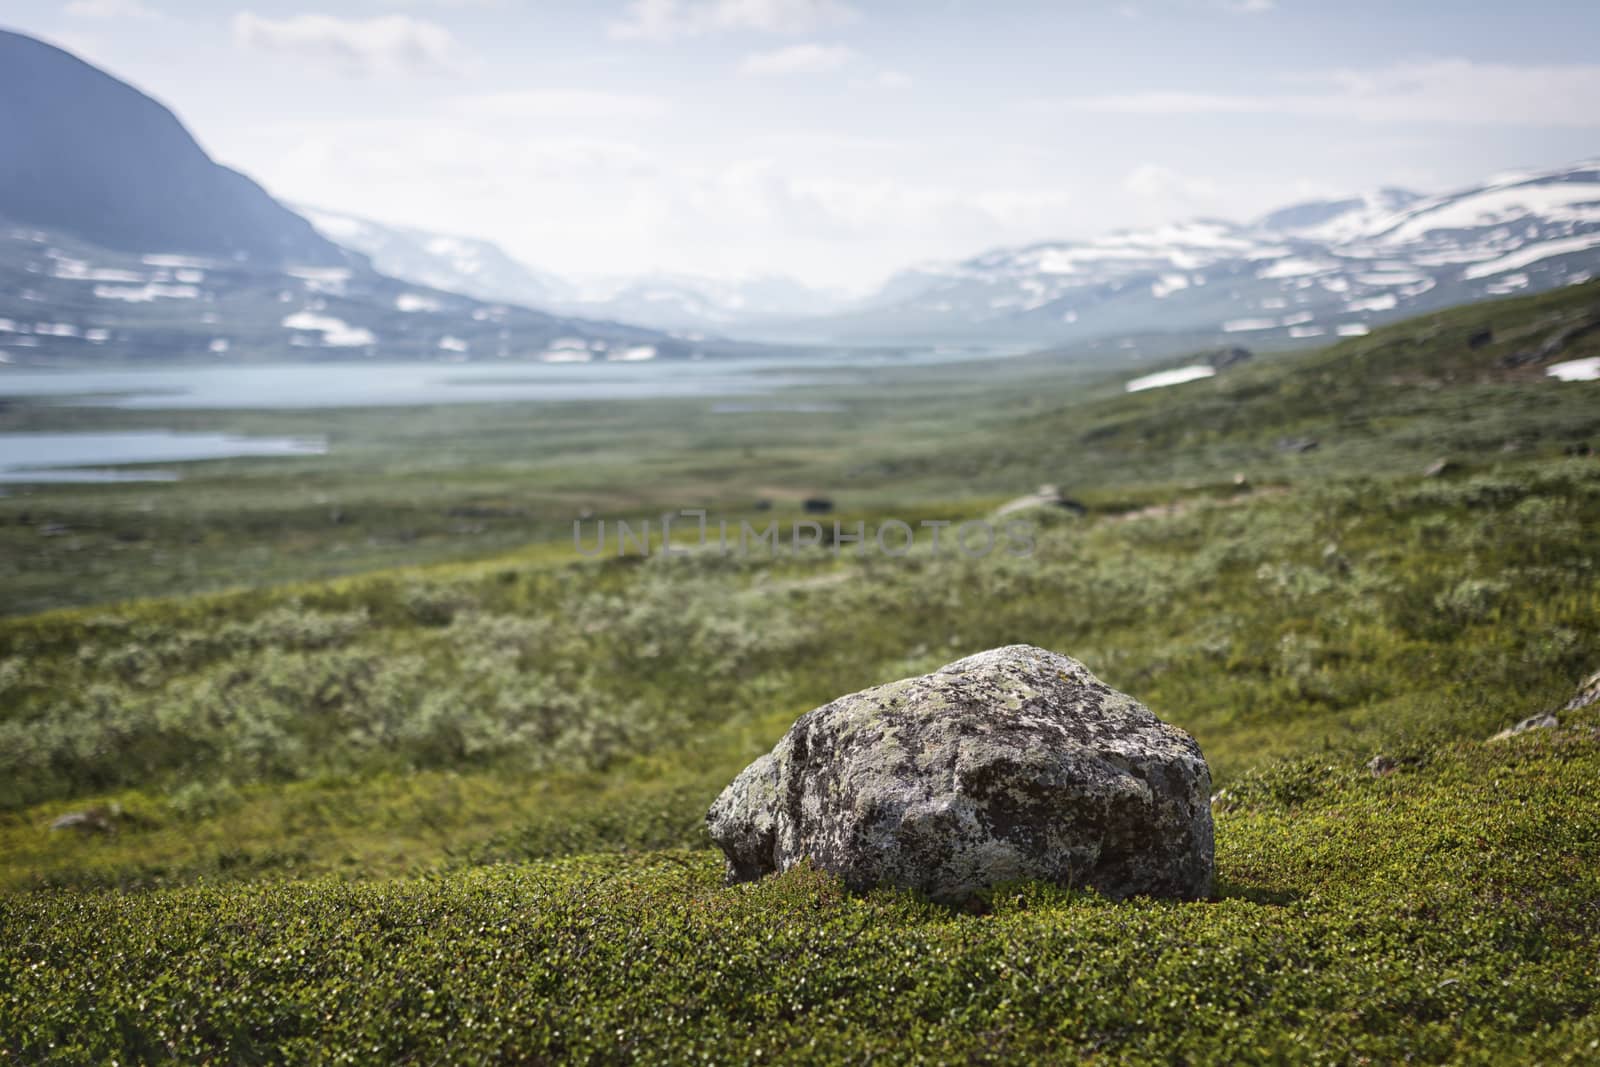 Tundra landscape in northern Lapland, Sweden